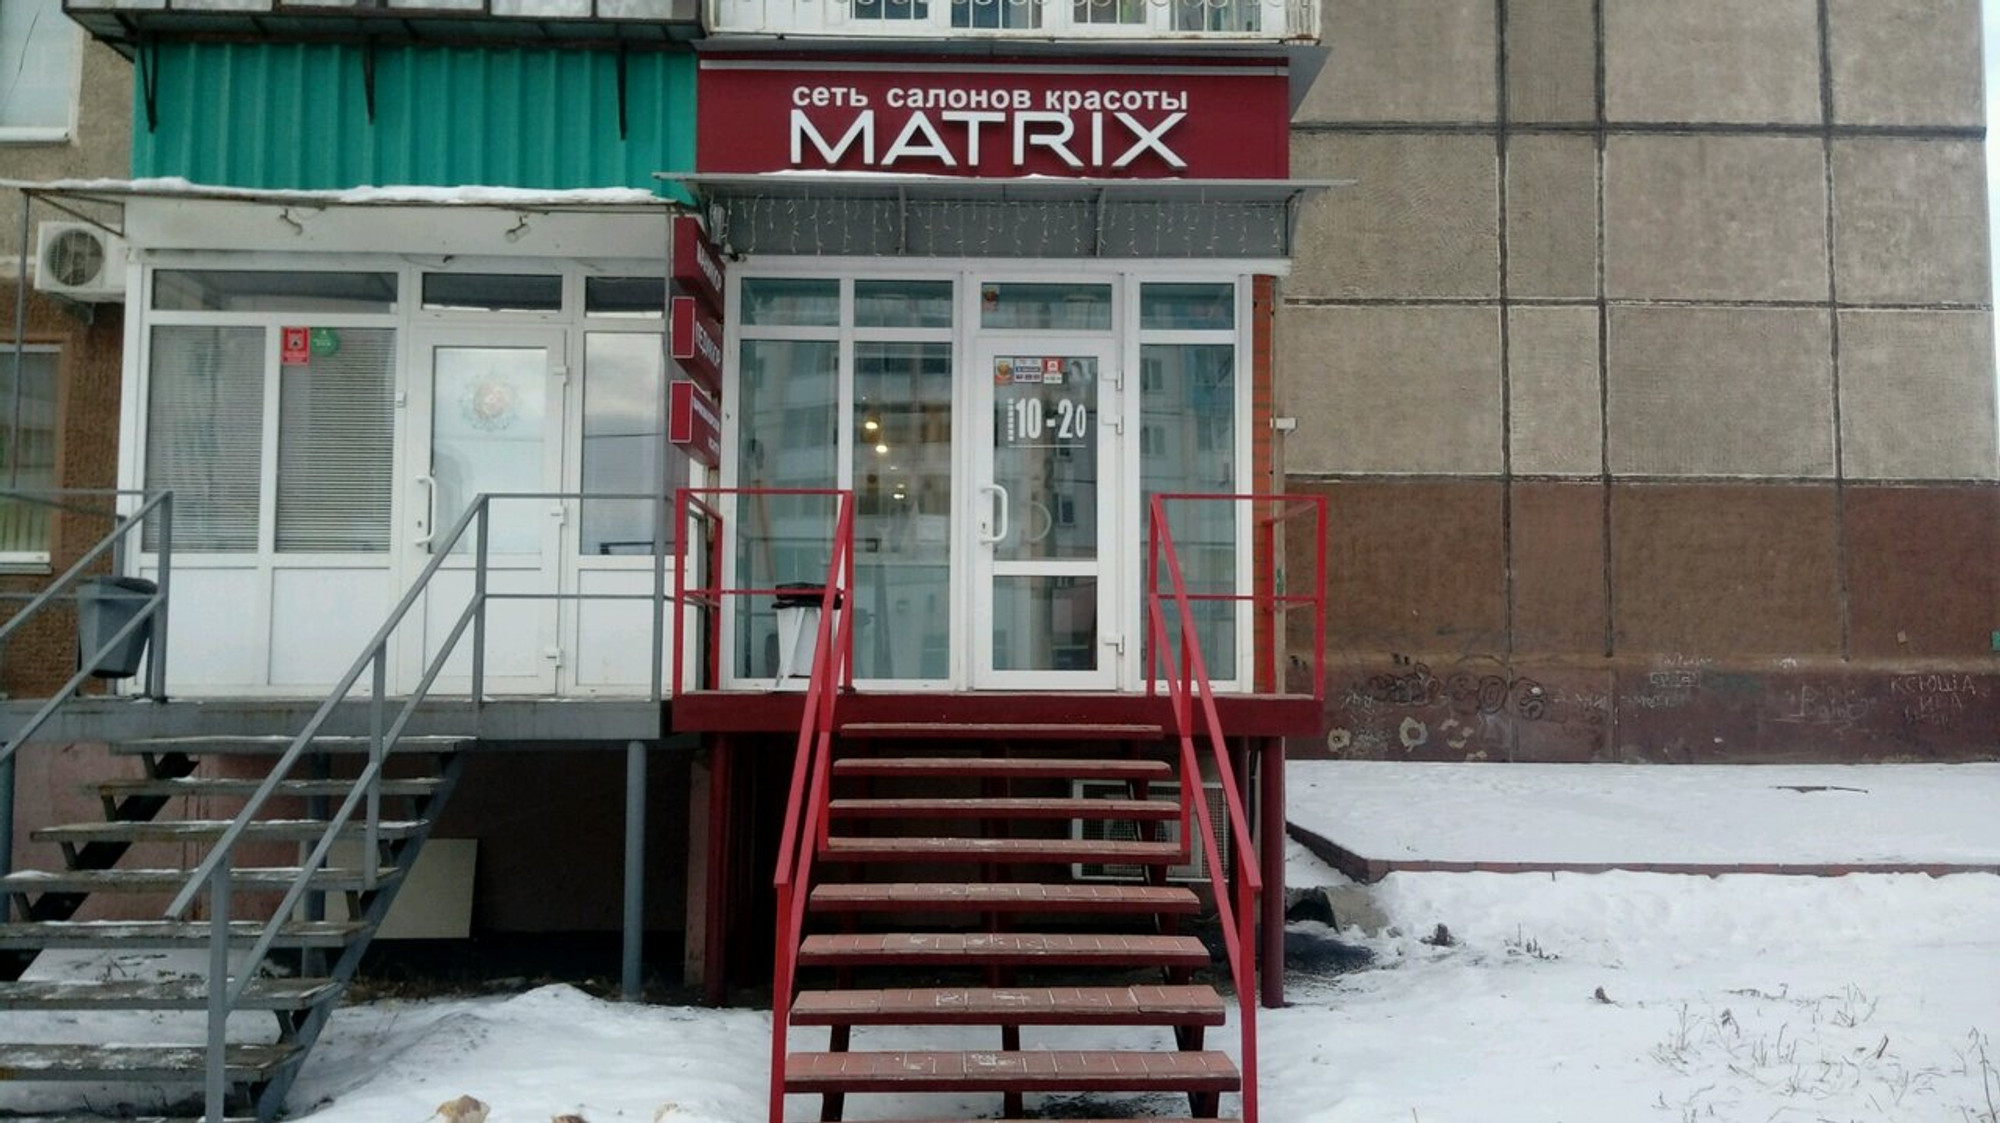 Matrix (Салон красоты )